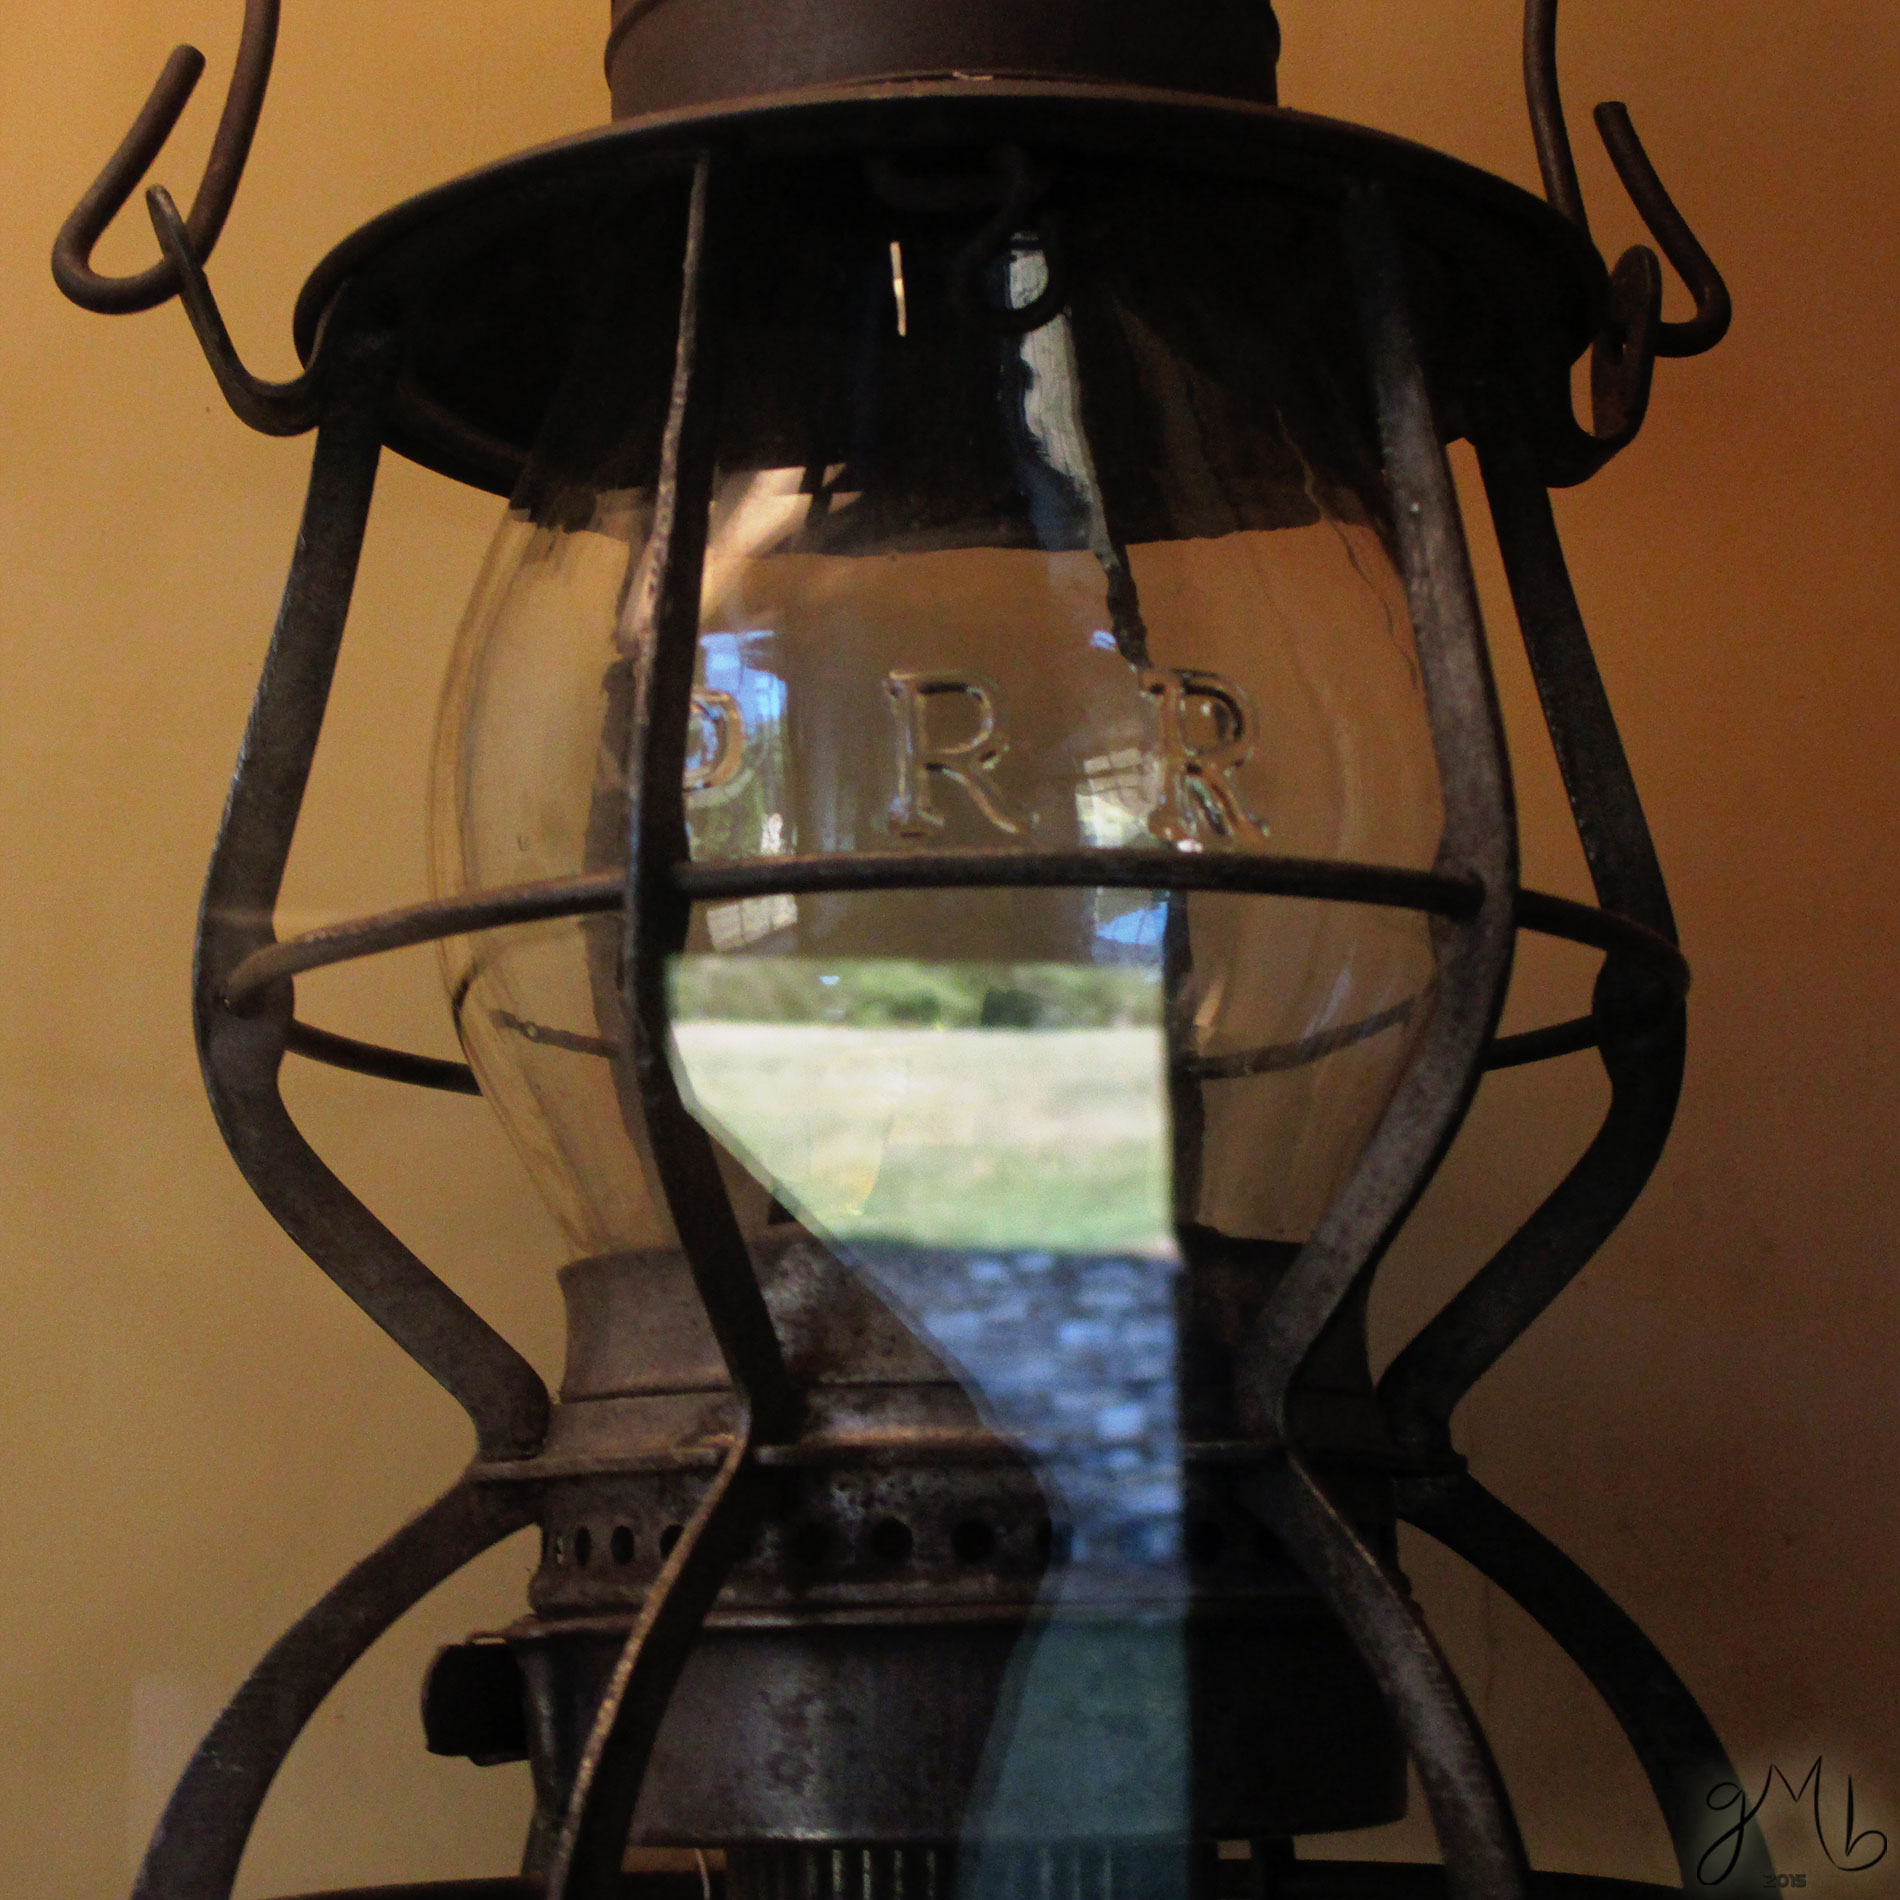 Lantern on display.